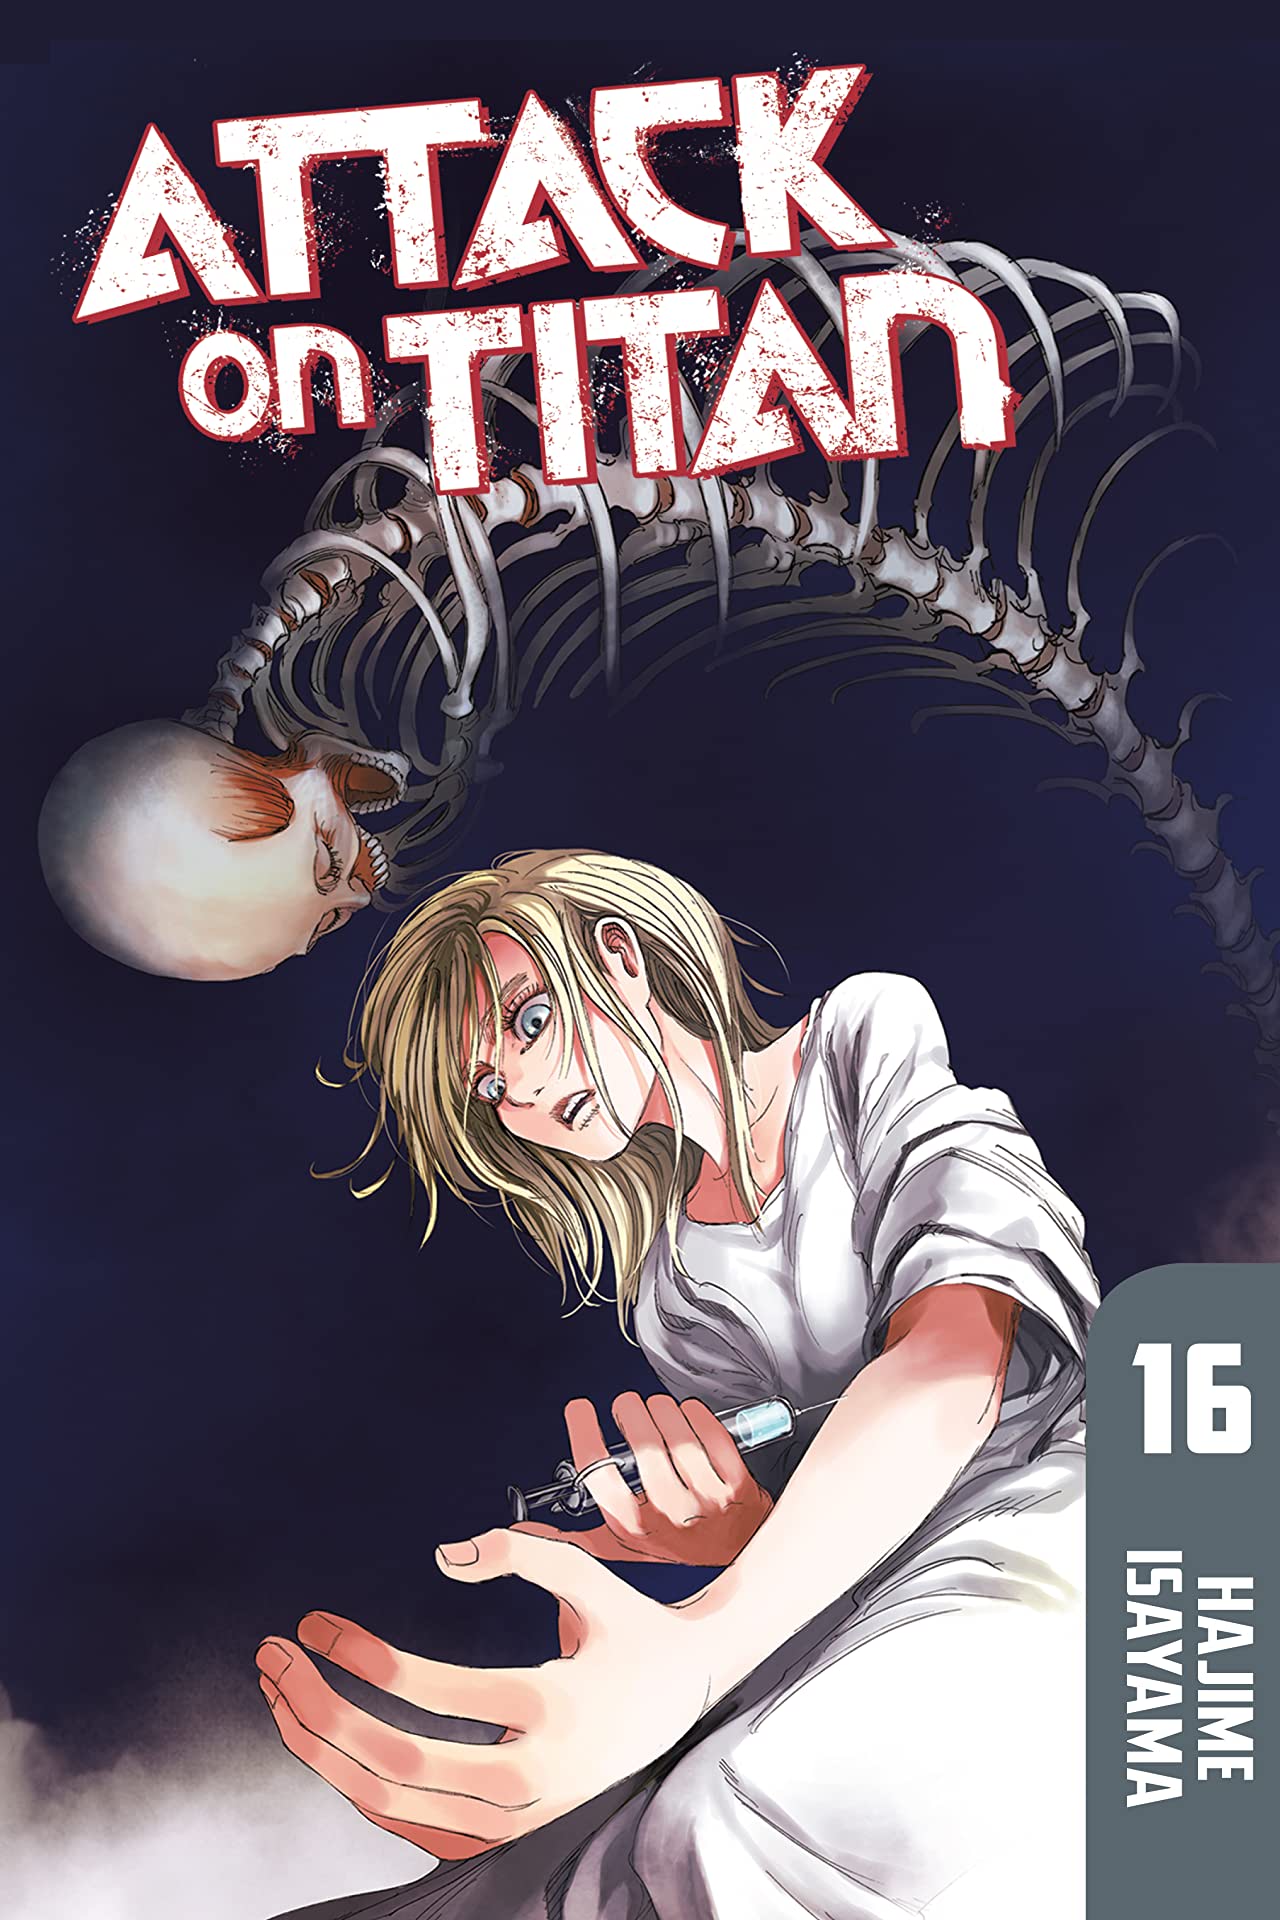 Attack on Titan Volume 16